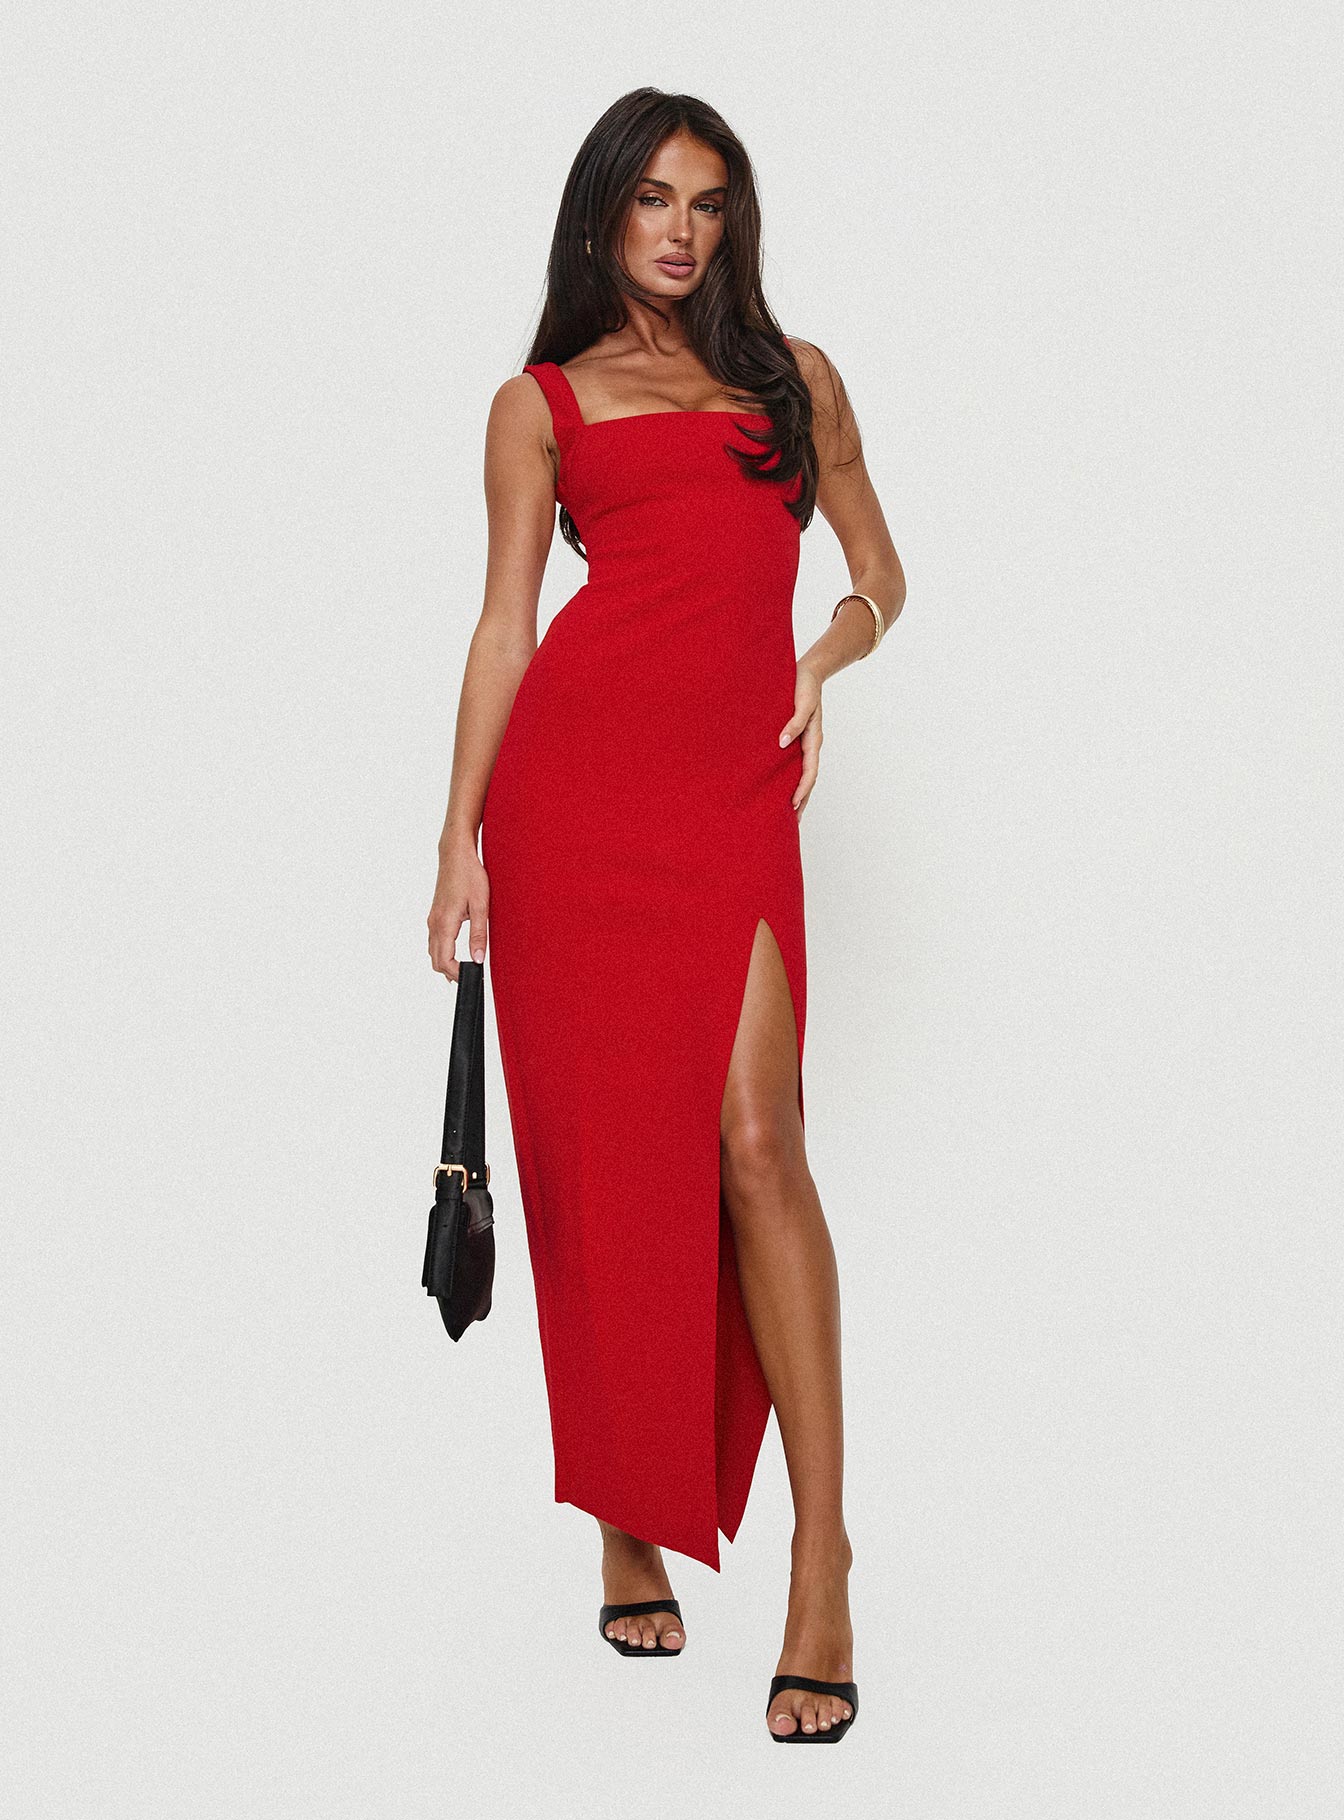 Shop Formal Dress - Bombshell Maxi Dress Red third image